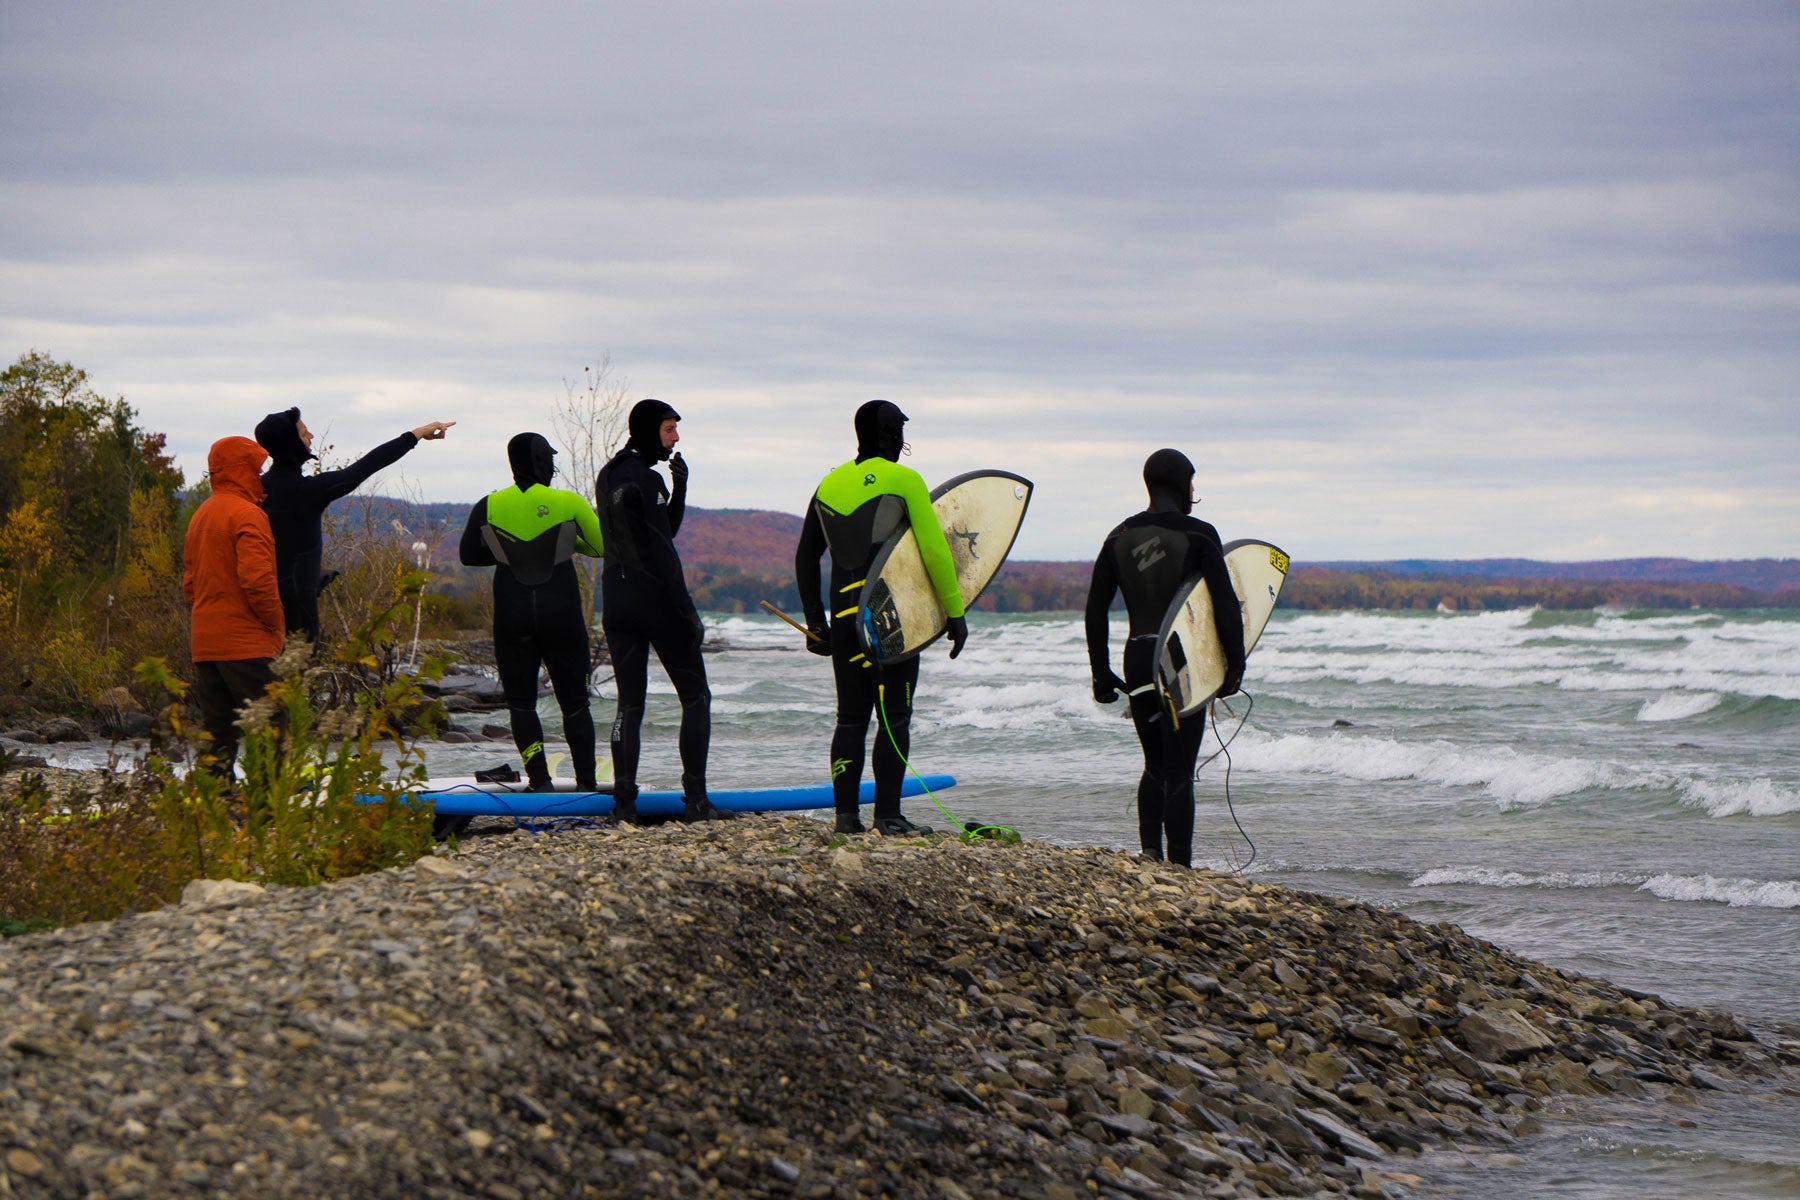 Surf on the Great Lakes by Nat Kuleba